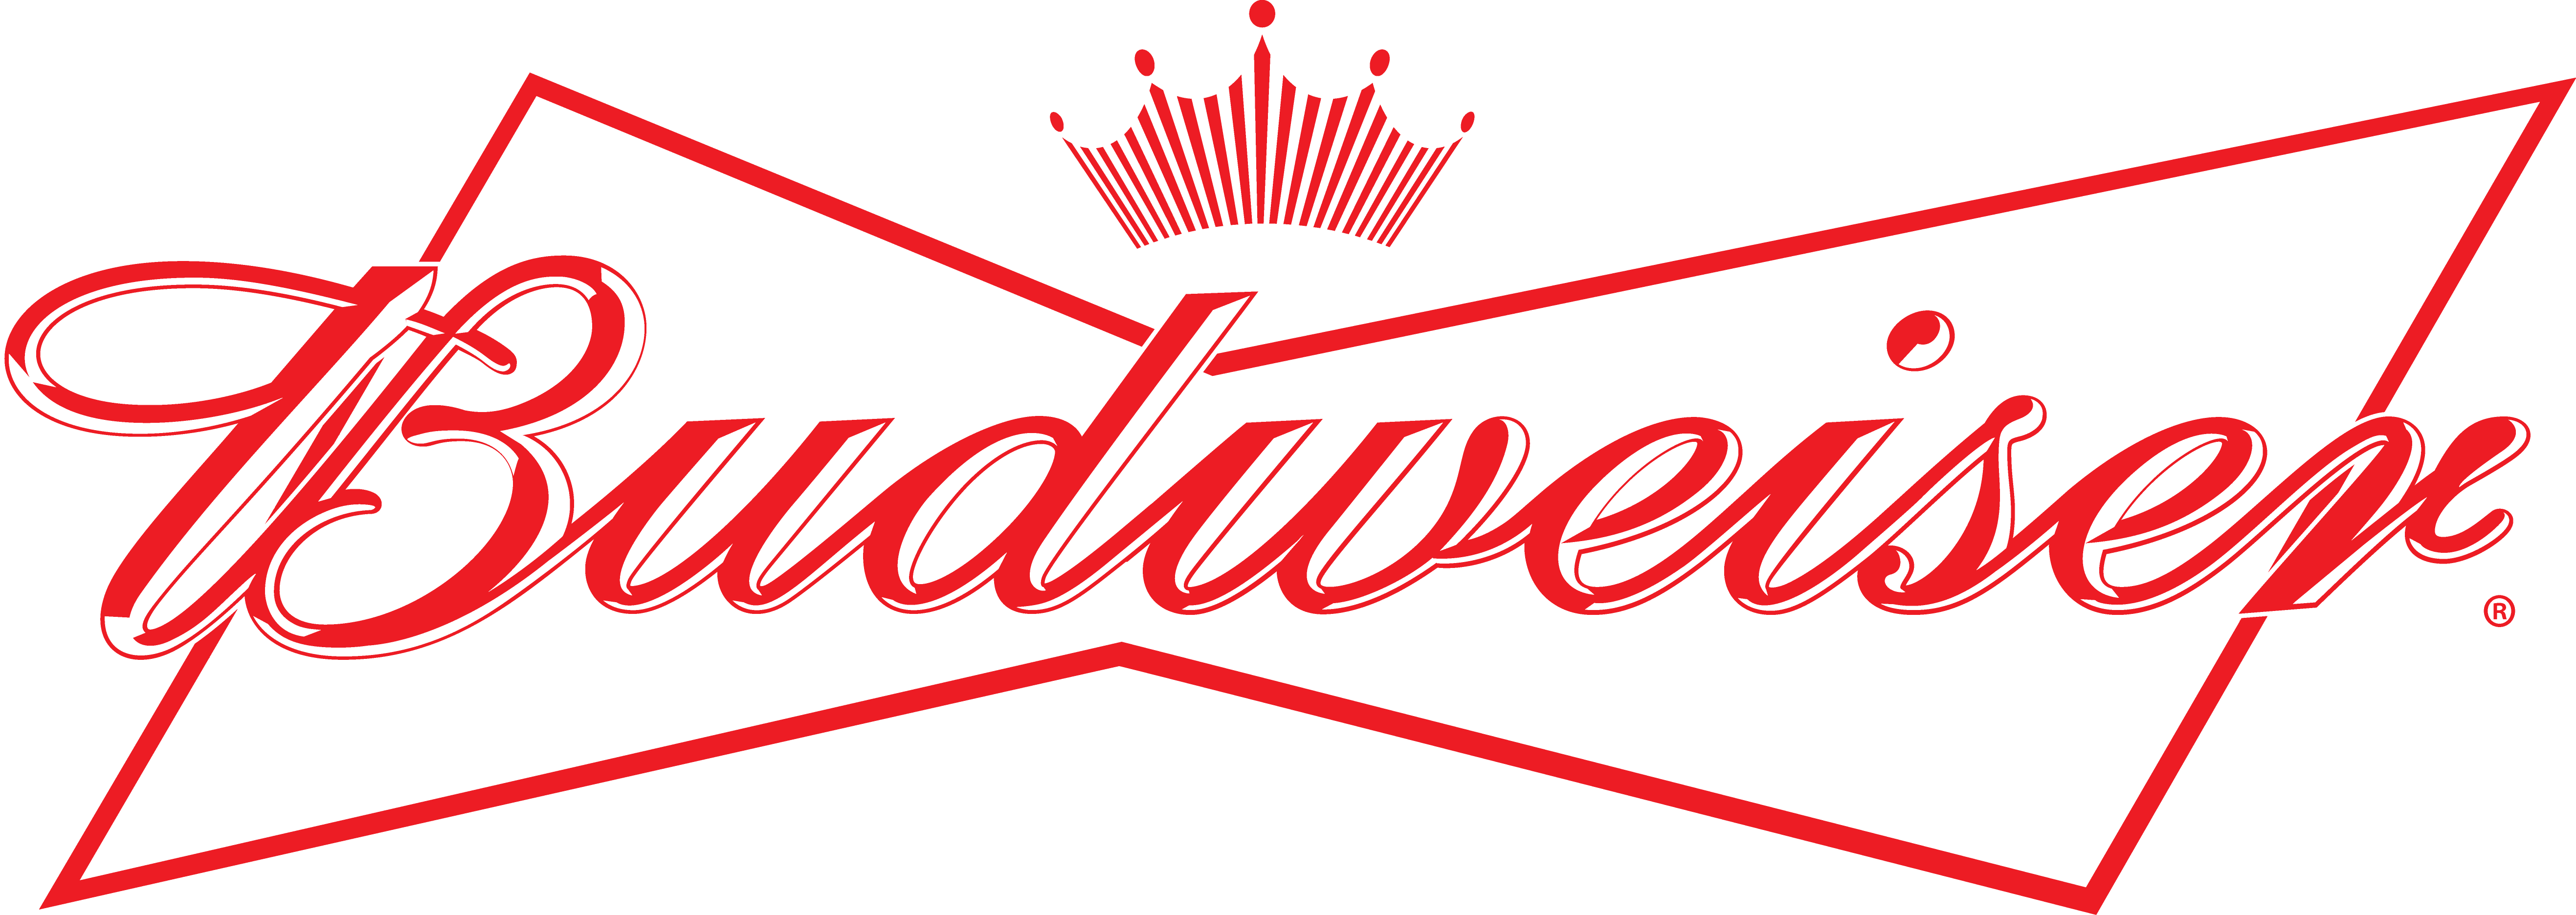 Budweiser Logo - Budweiser | Even More Logos | Logos, Outdoor stickers, Stickers